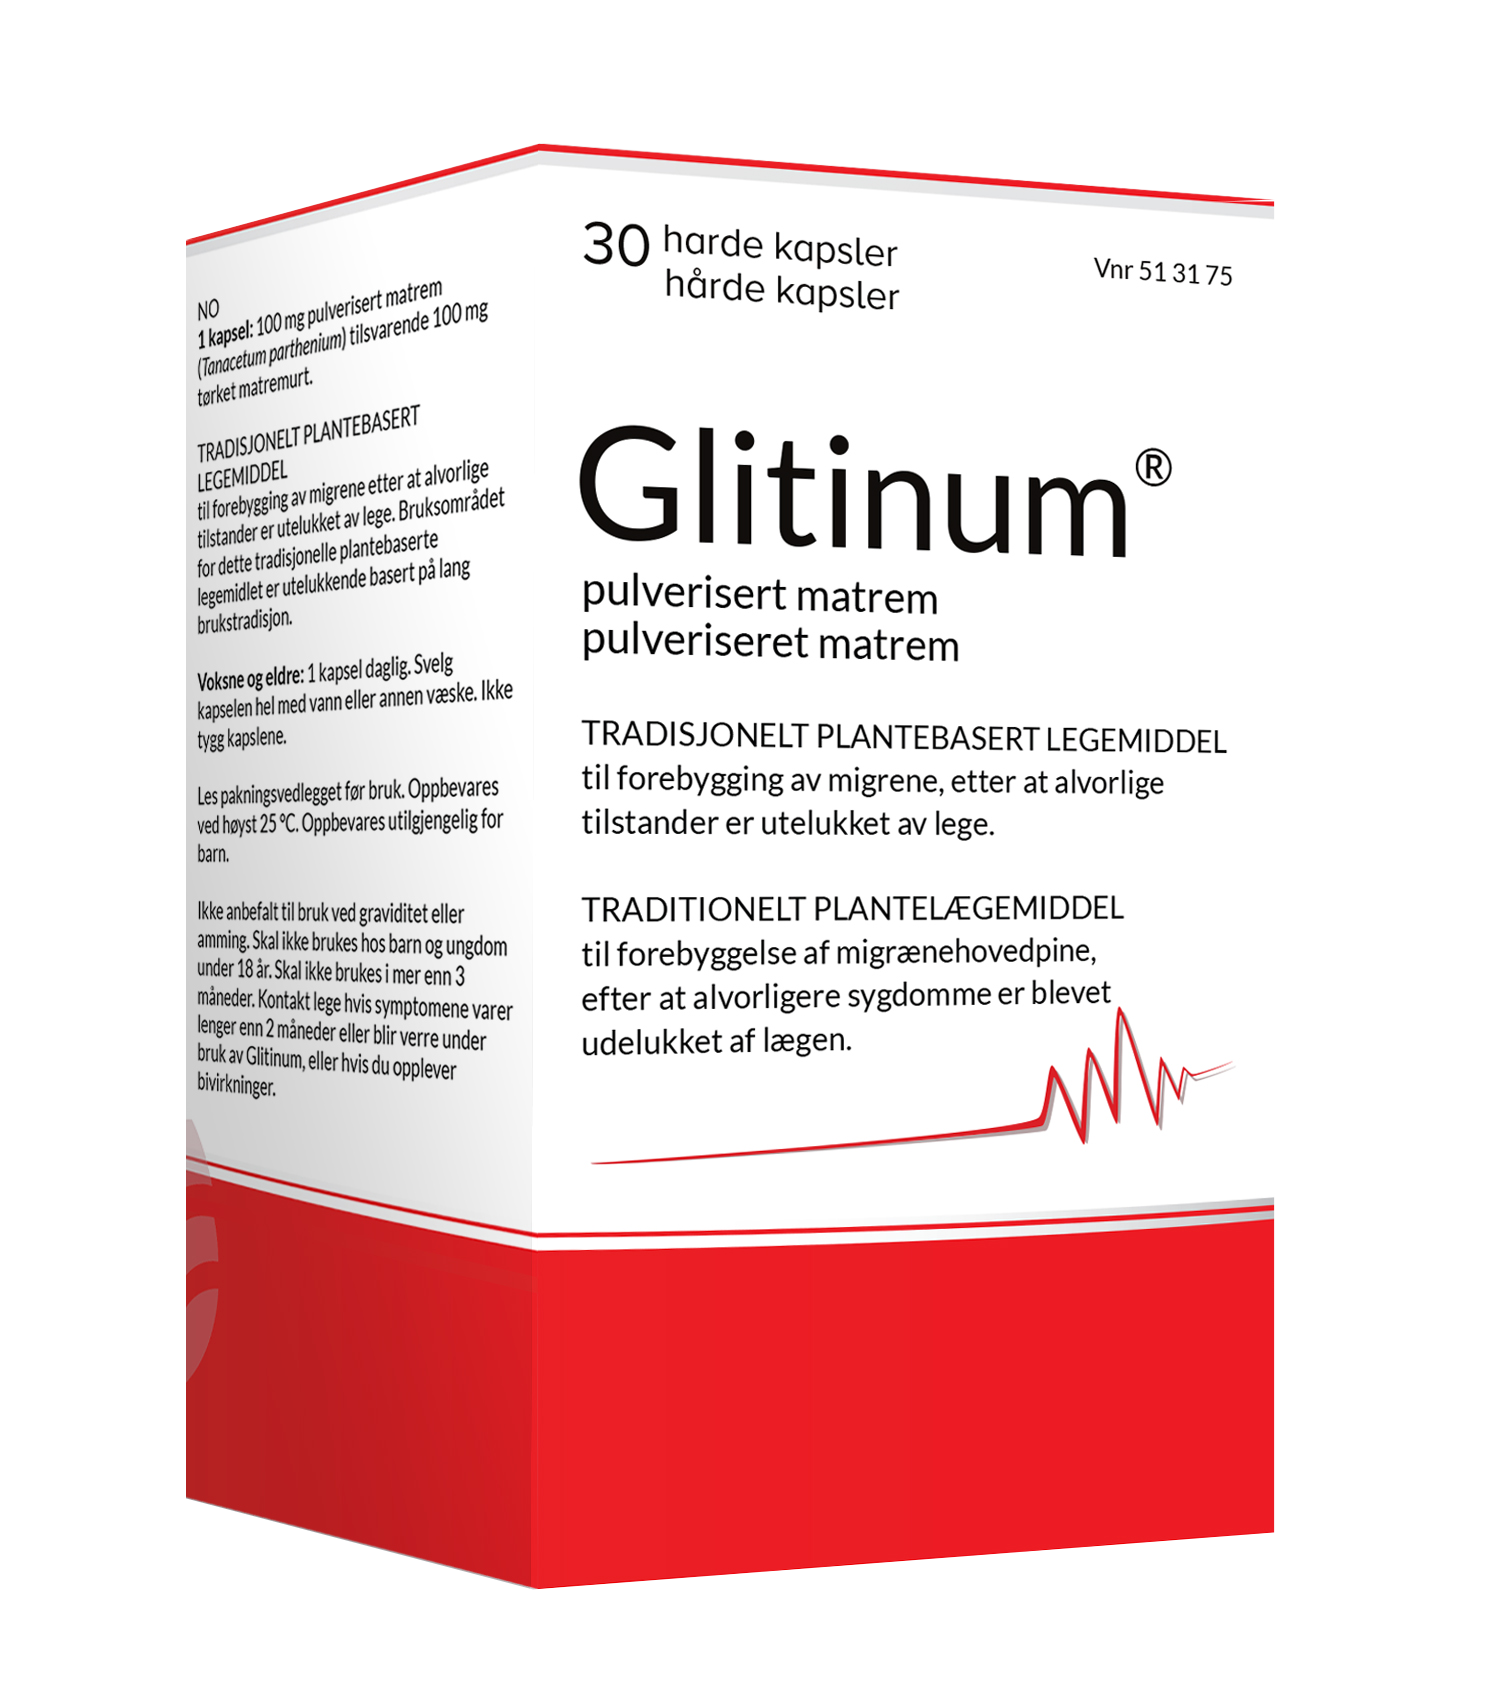 Glitinum Pack 2